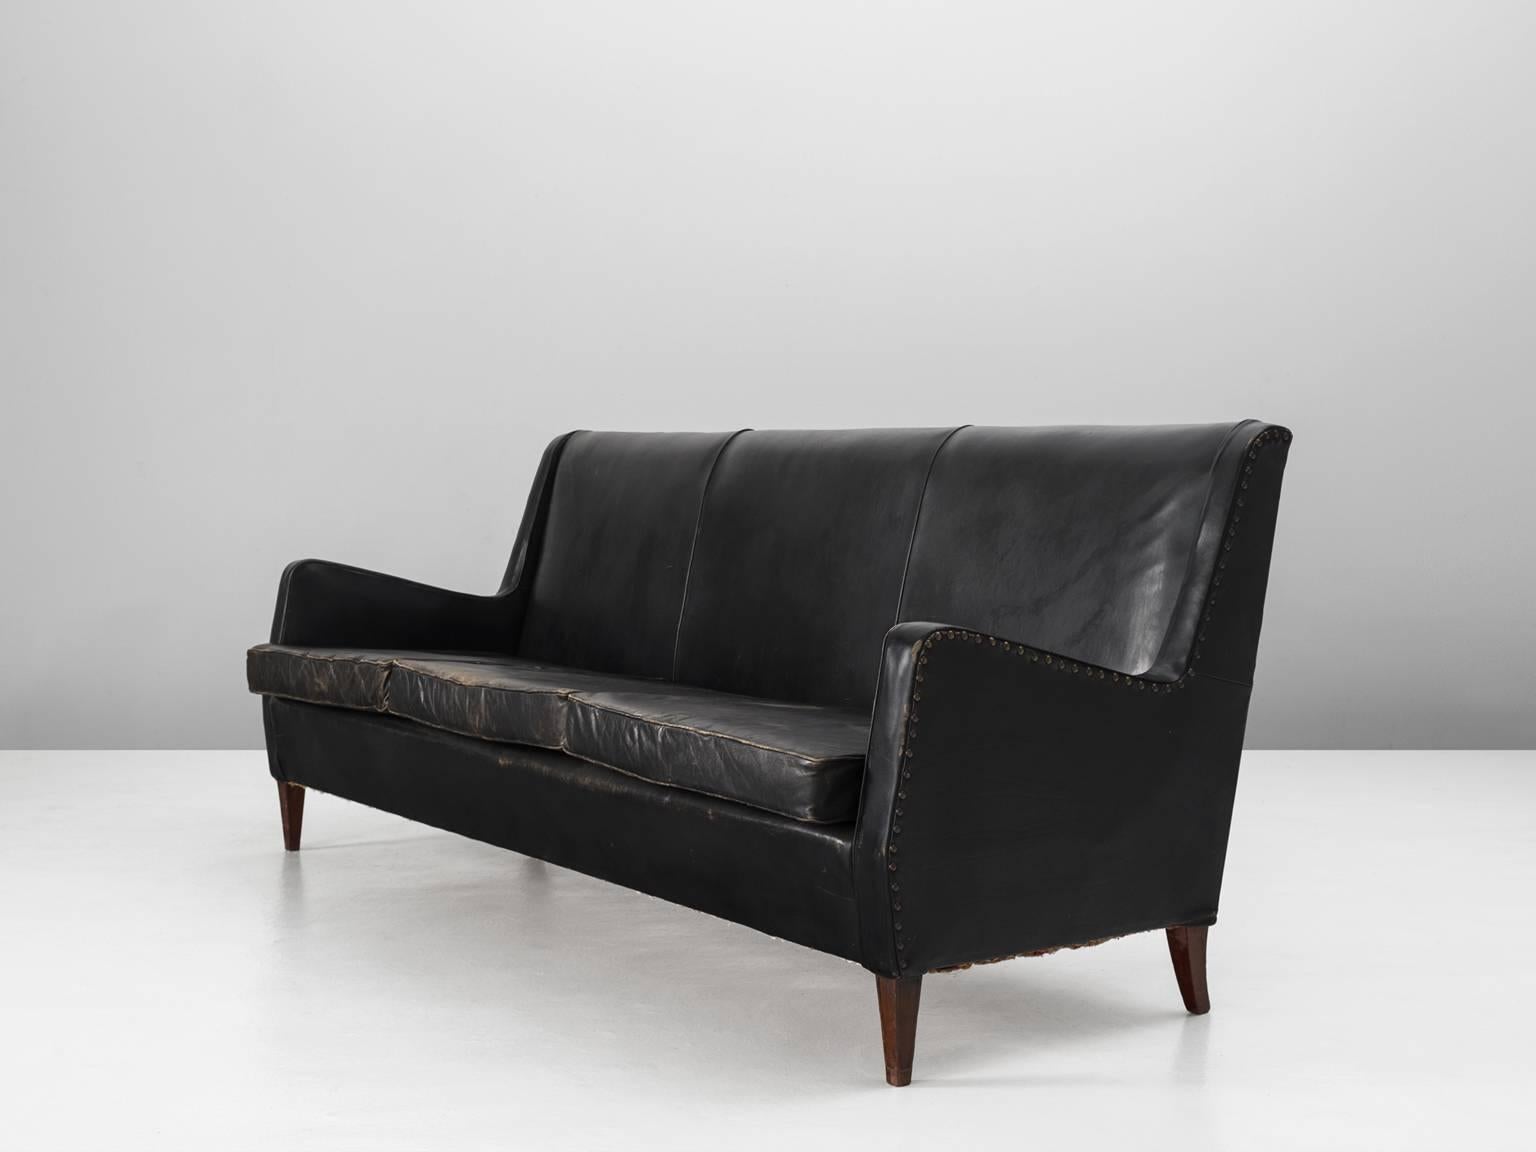 Danish Living-Room Set in Original Black Leather Upholstery 1